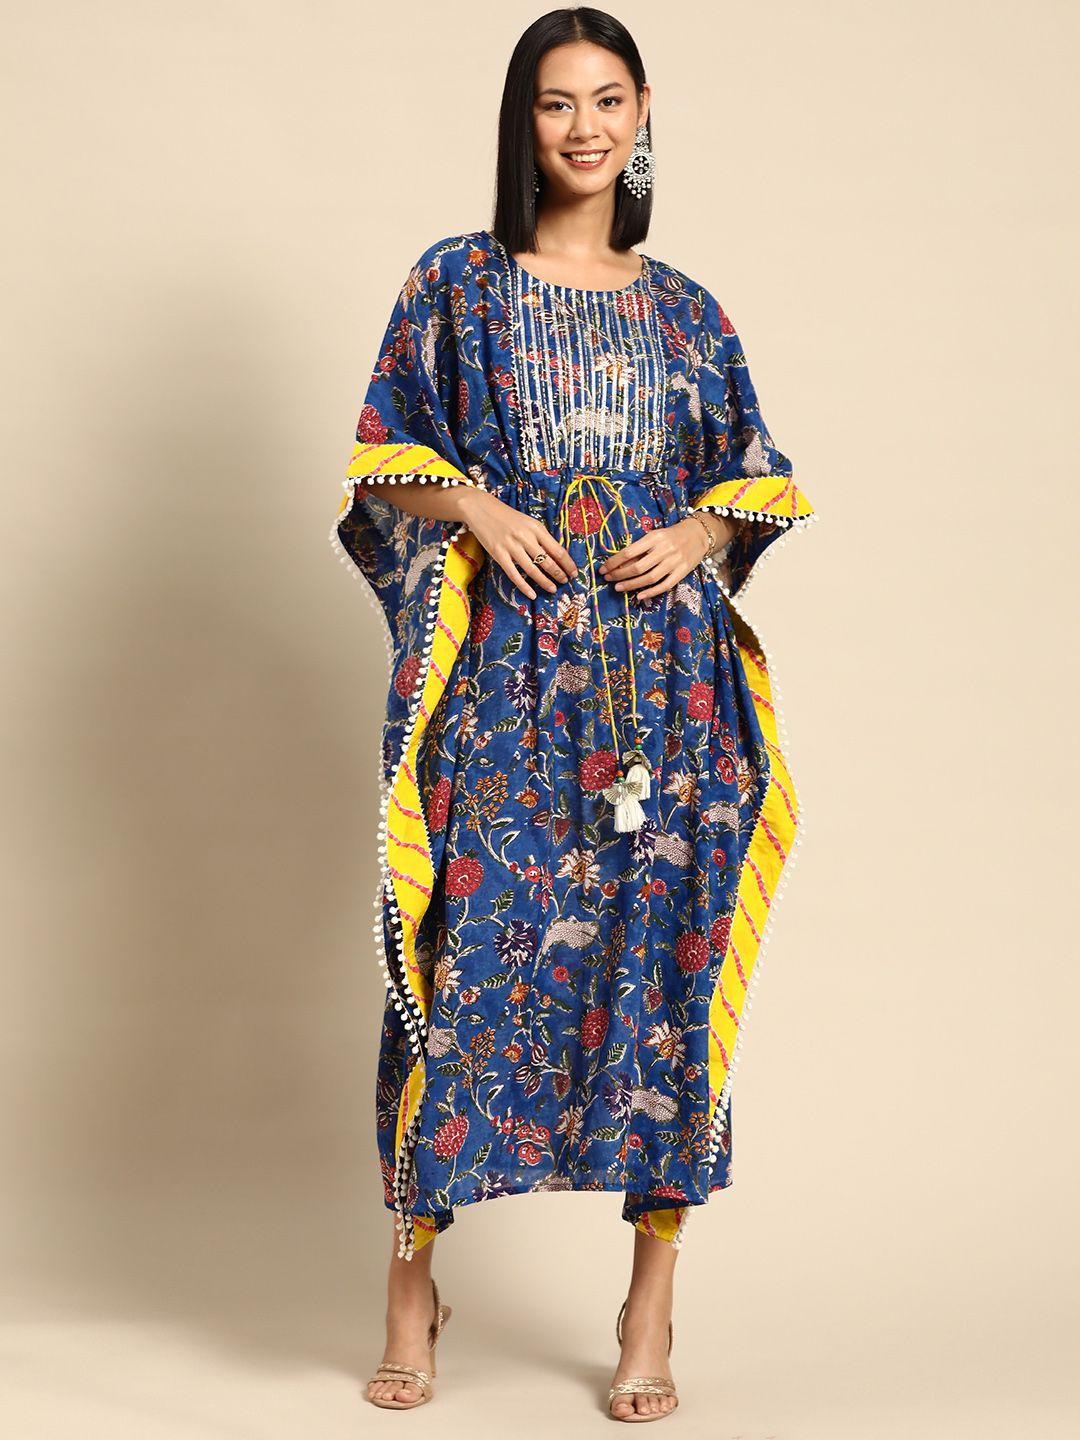 rangmayee navy blue & yellow floral ethnic kaftan cotton midi dress